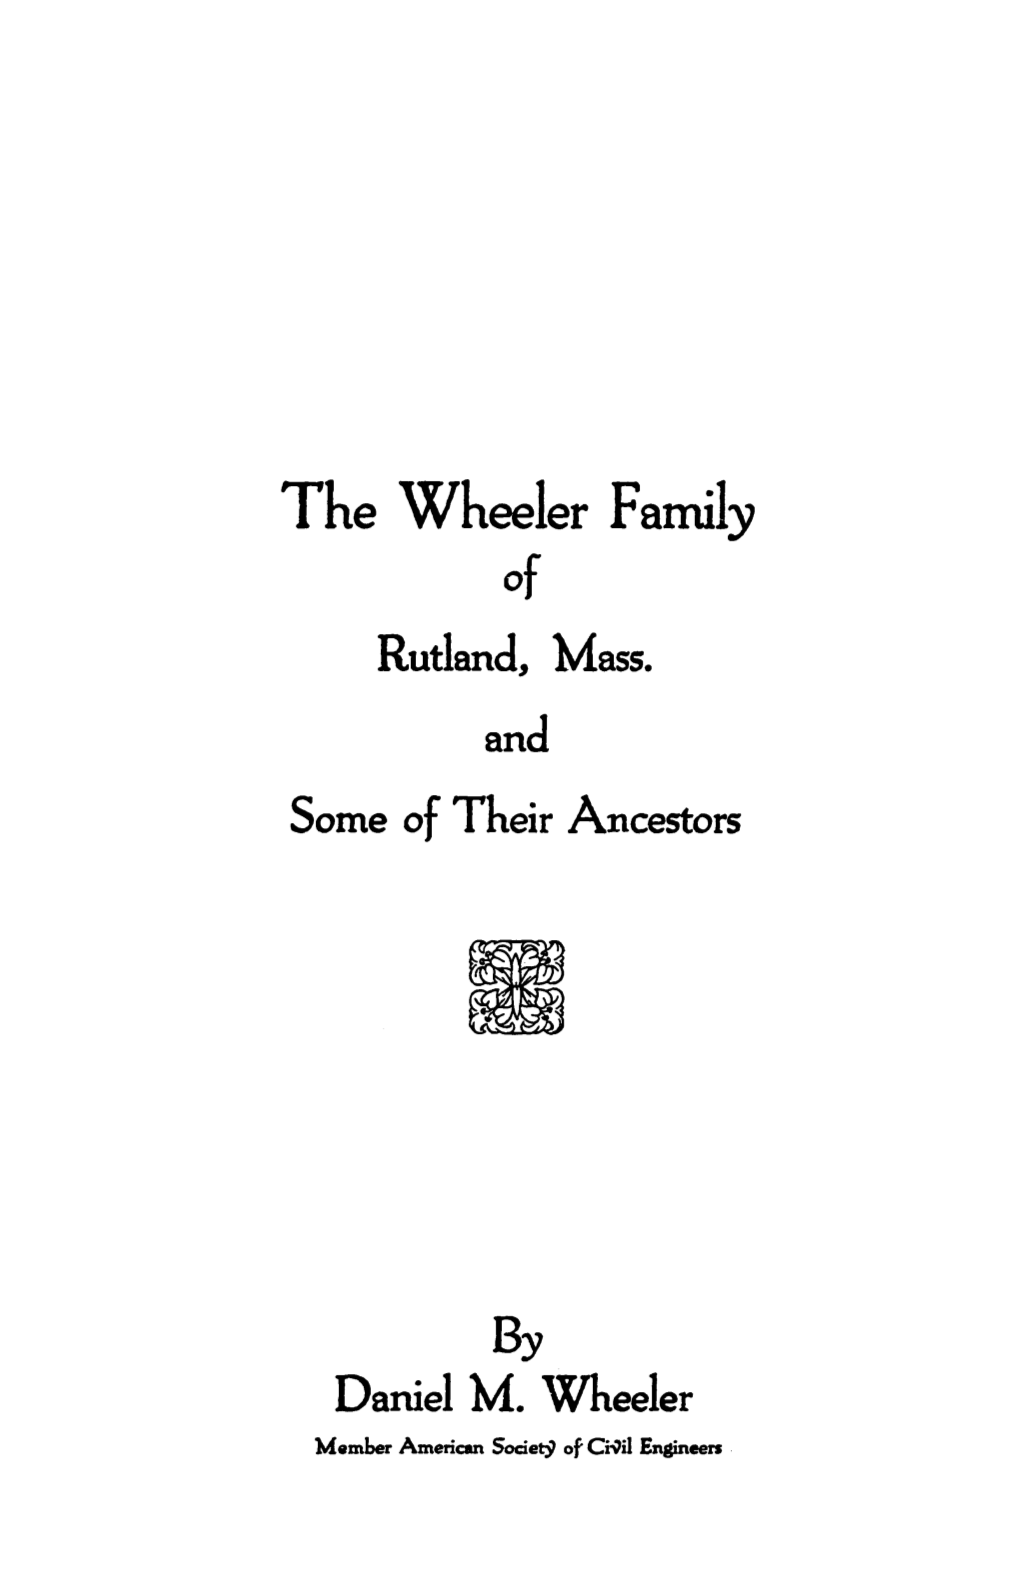 The Wheeler Family of Rutland, Mass